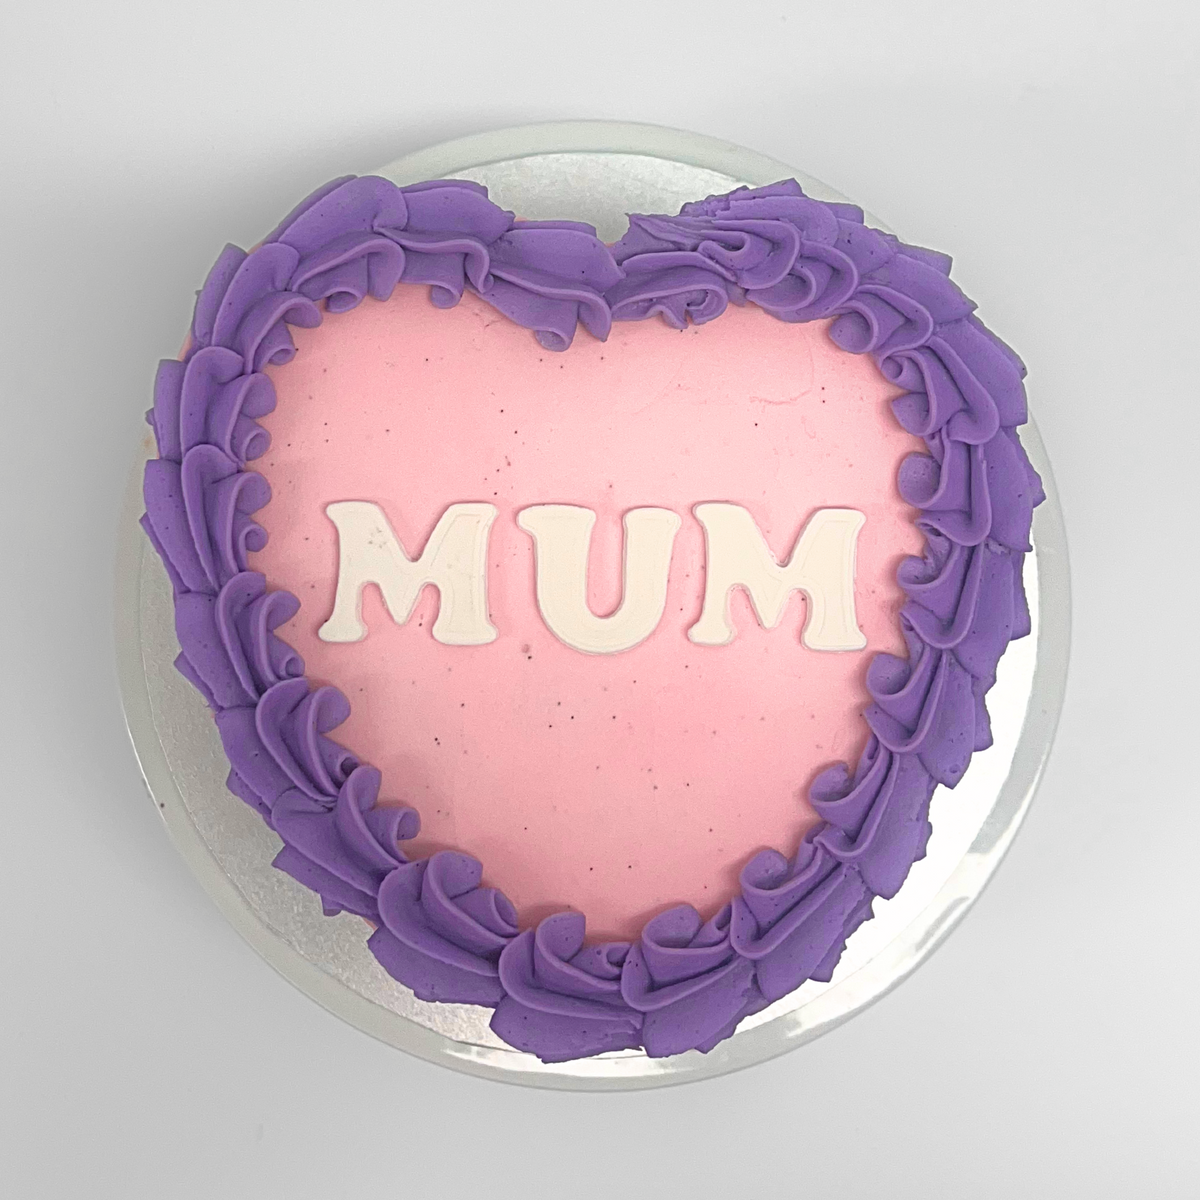 Mum Vintage Heart Cake